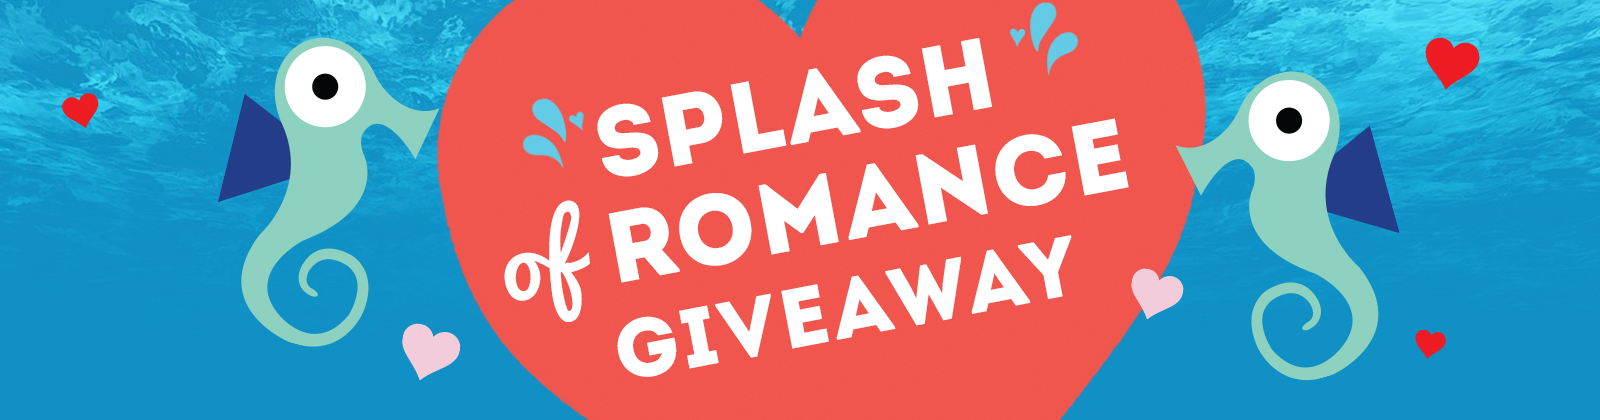 Splash of Romance Giveaway